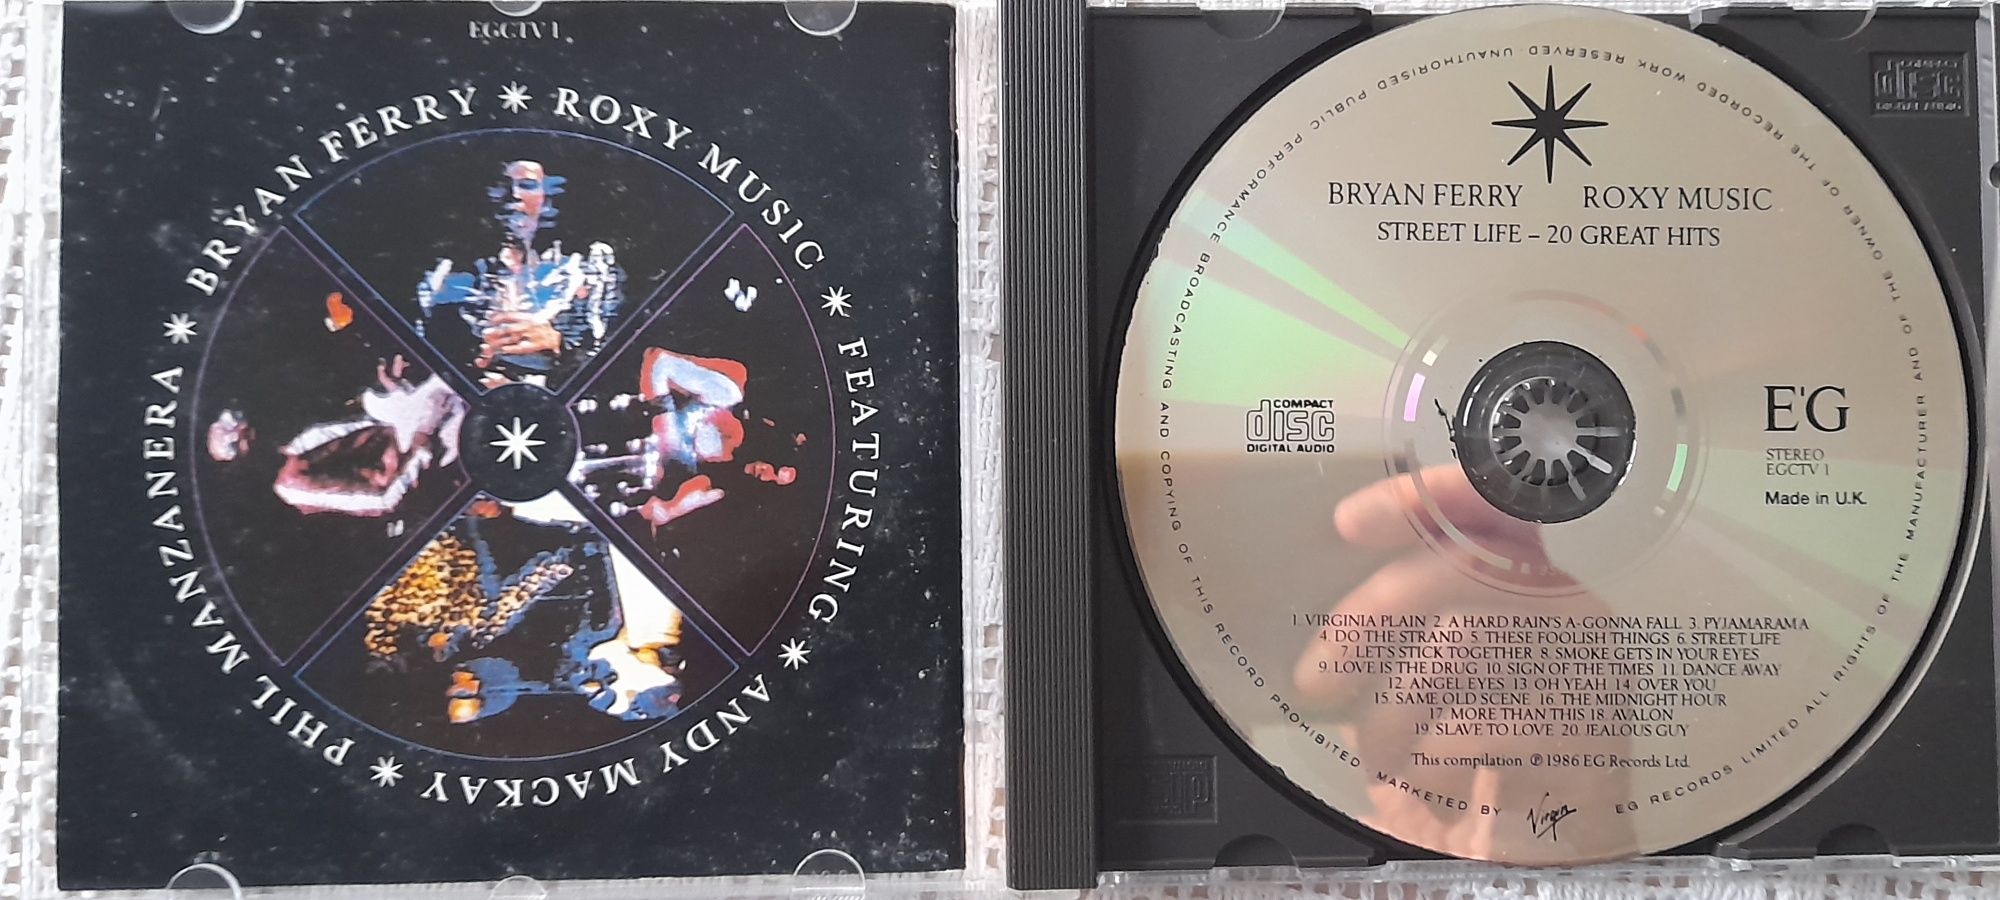 CD Bryan Ferry e Roxy Music 5€ cada